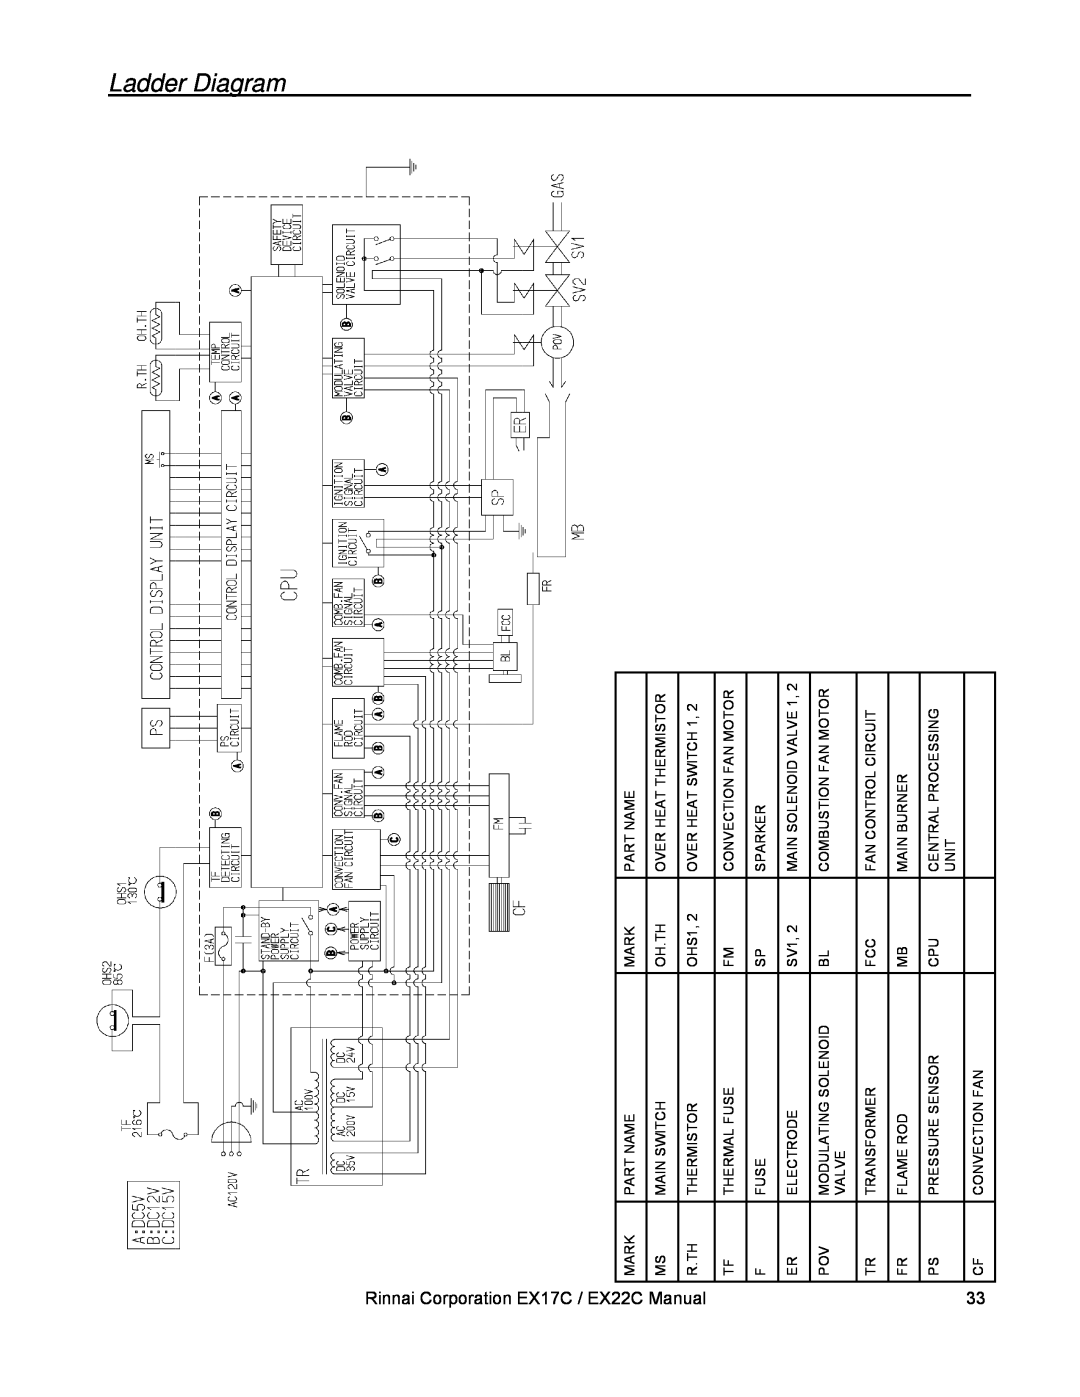 Rinnai EX17C (RHFE-434FTA), EX22C (RHFE-559FTA) installation manual Ladder Diagram, Rinnai Corporation EX17C 